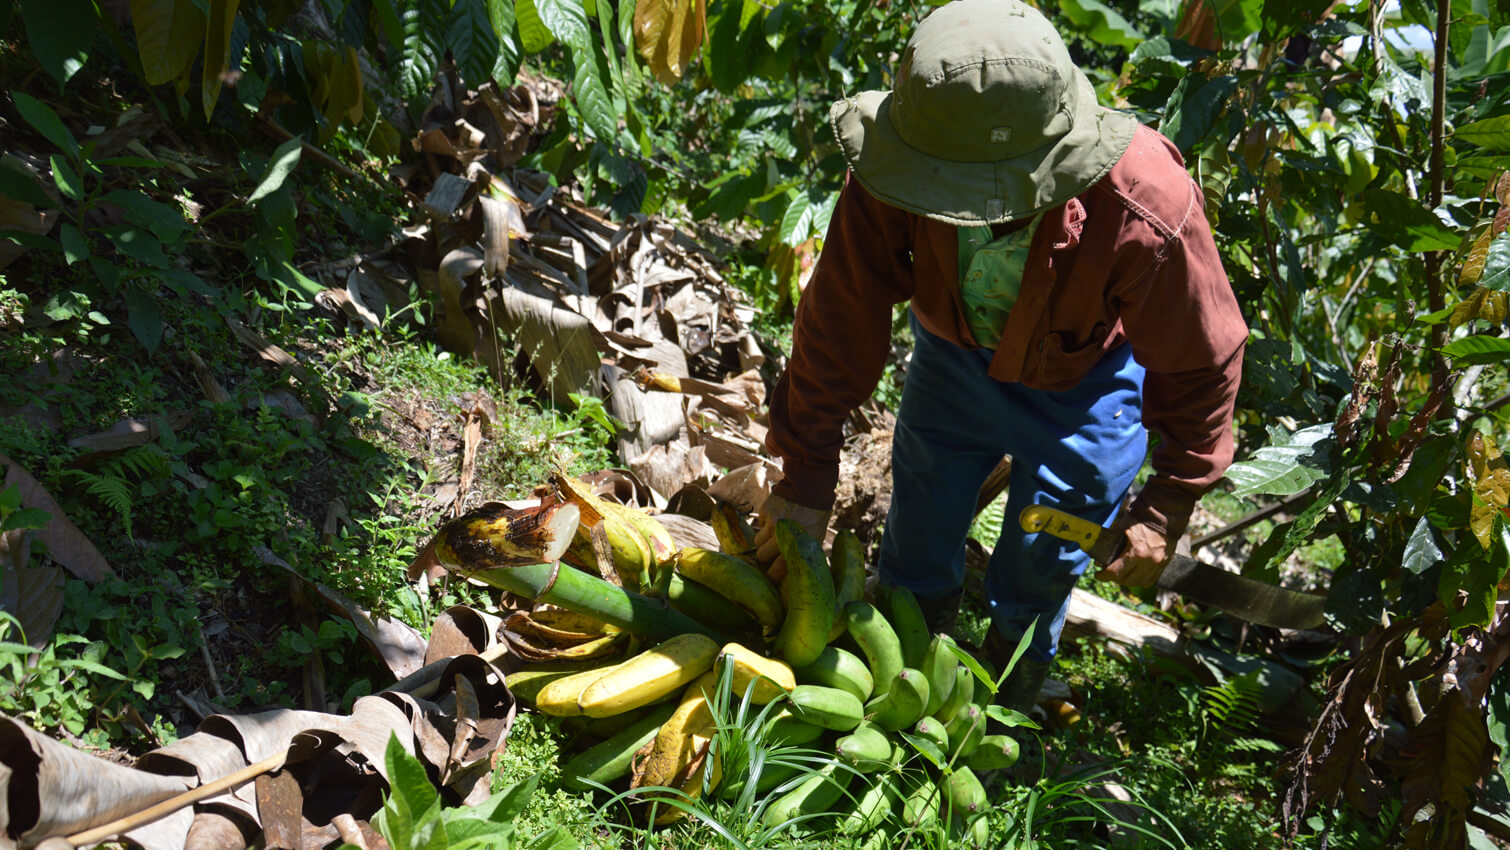  Banane coopÃ©rative UROCAL en Equateur purÃ©e fruits